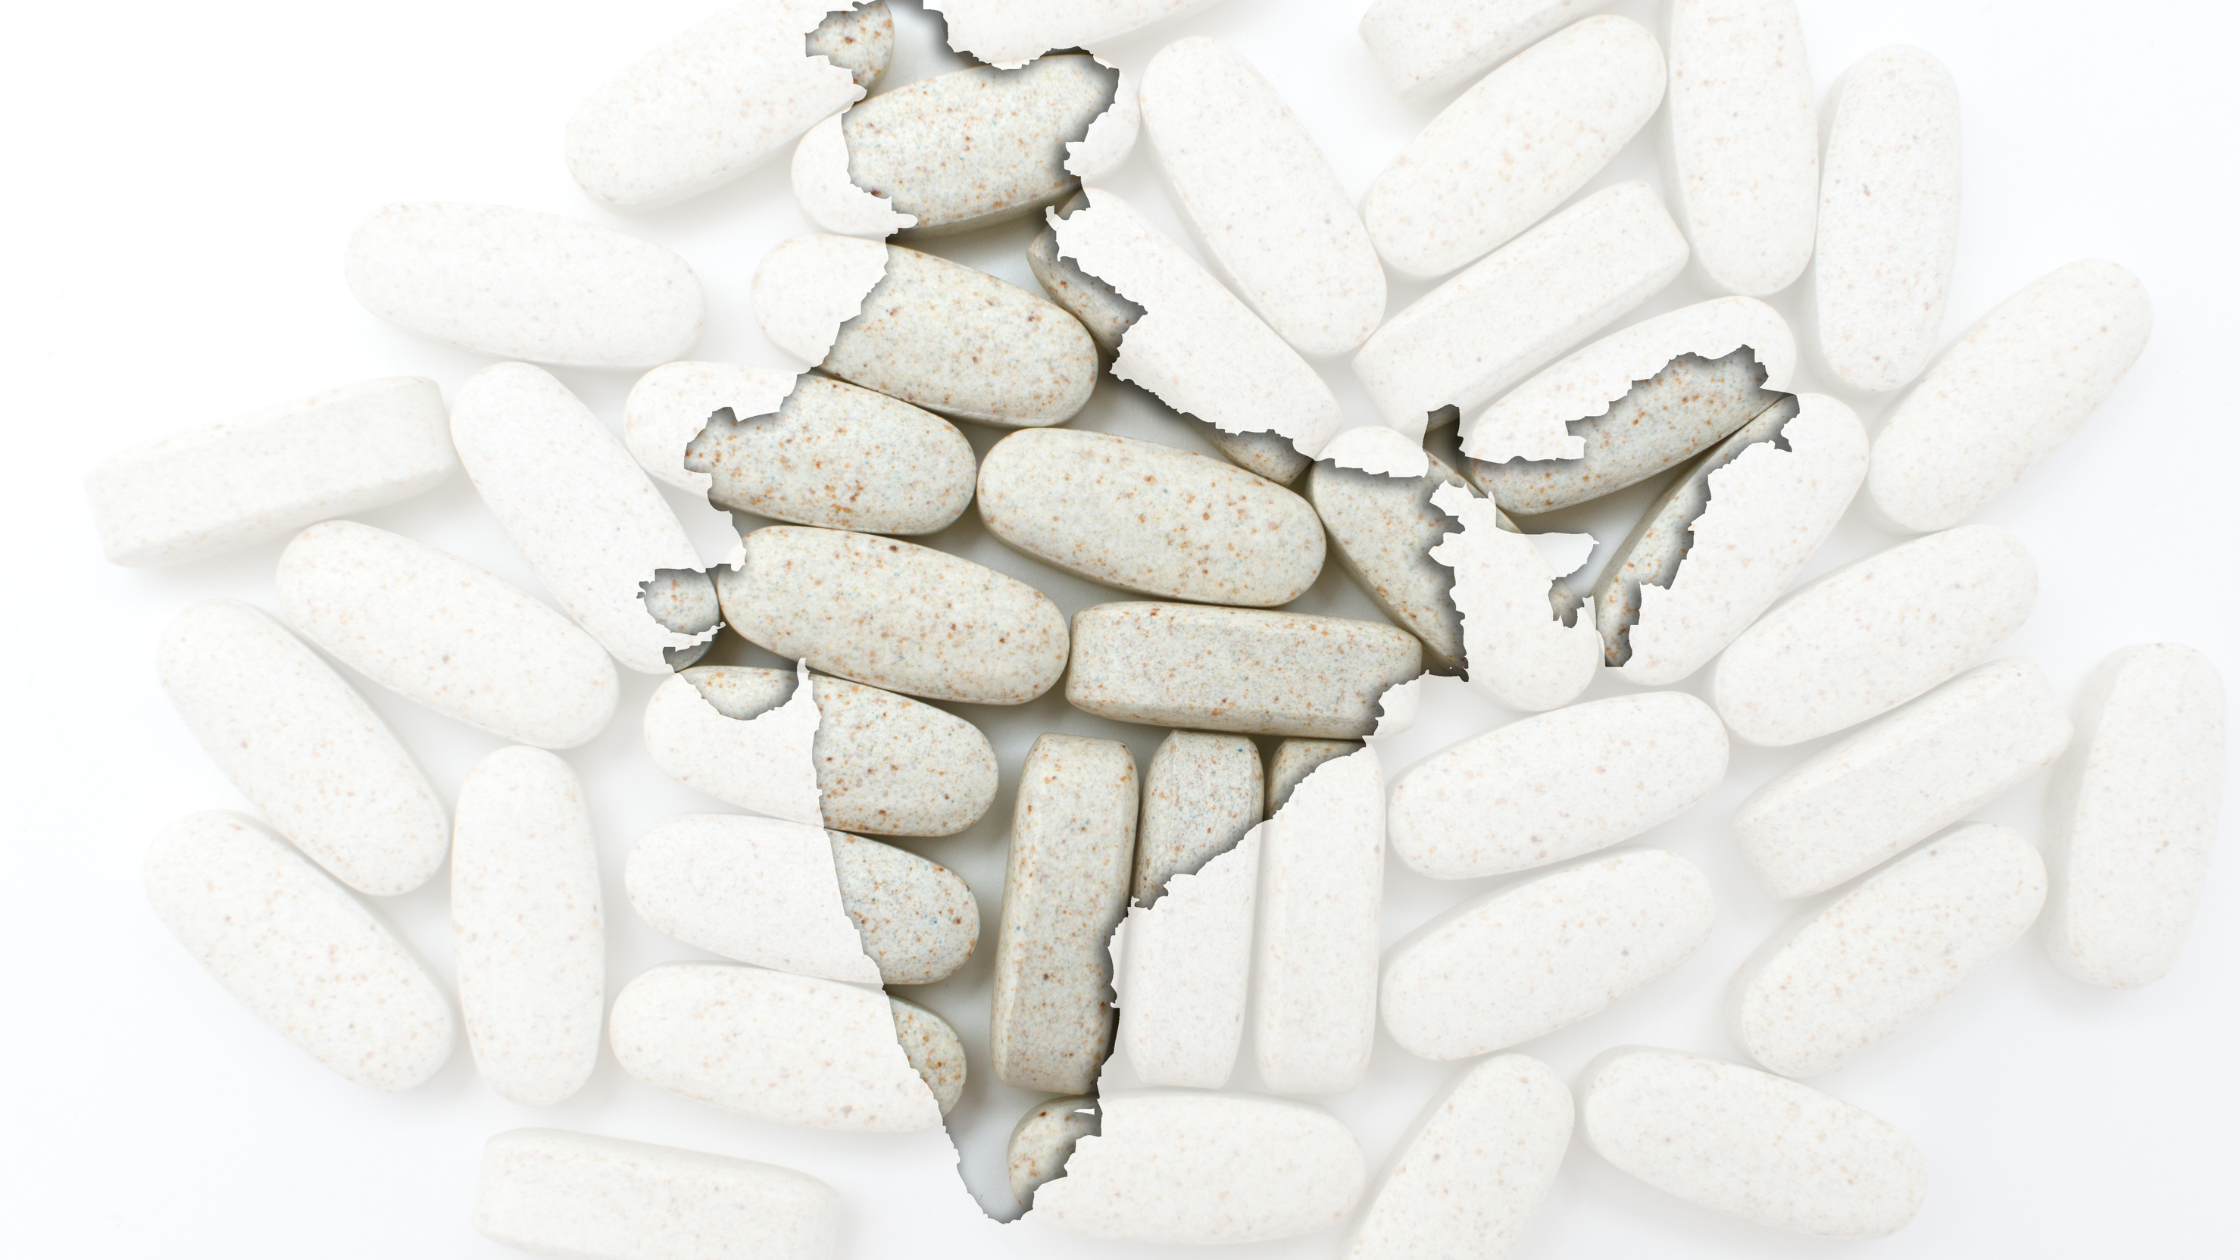 Pharmacogenomics, Diverse population, Indian Population, Drug responses, genomics, precision medicine